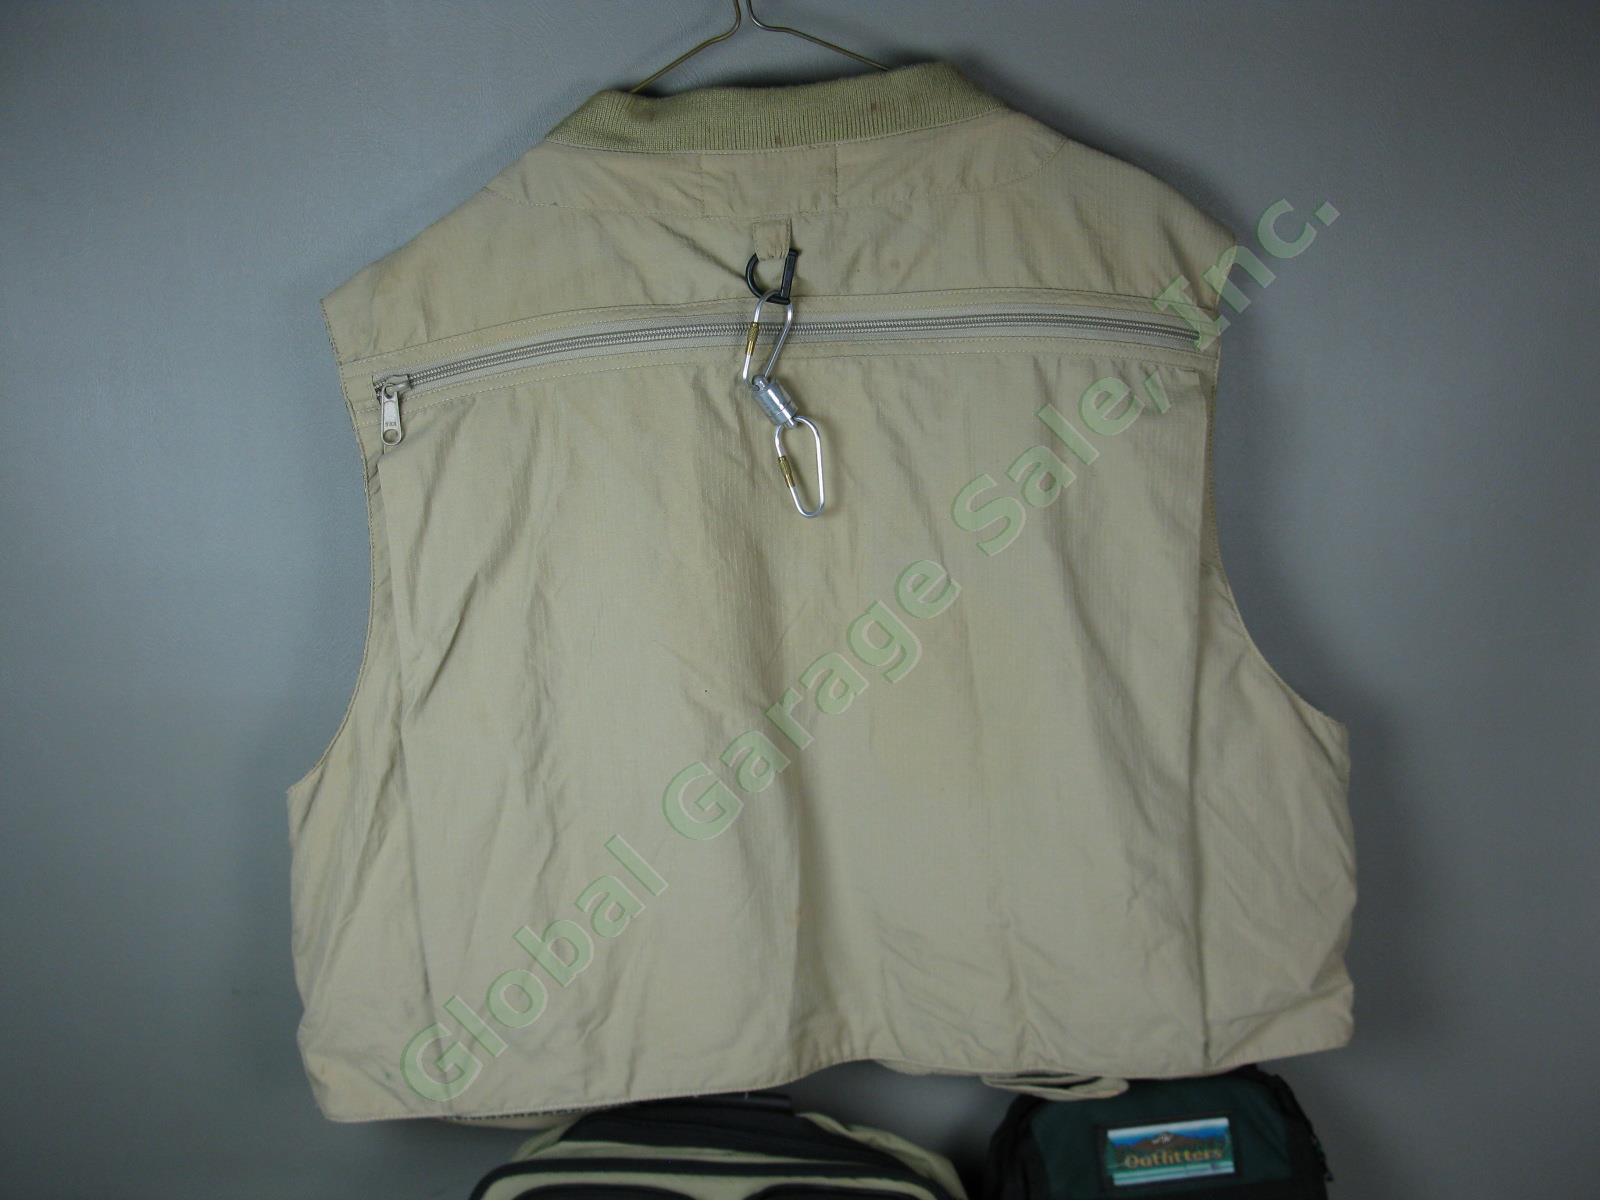 Huge Fly Fishing Gear Lot LL Bean Vest Orvis Cases Line New Bags Books Cabelas + 3